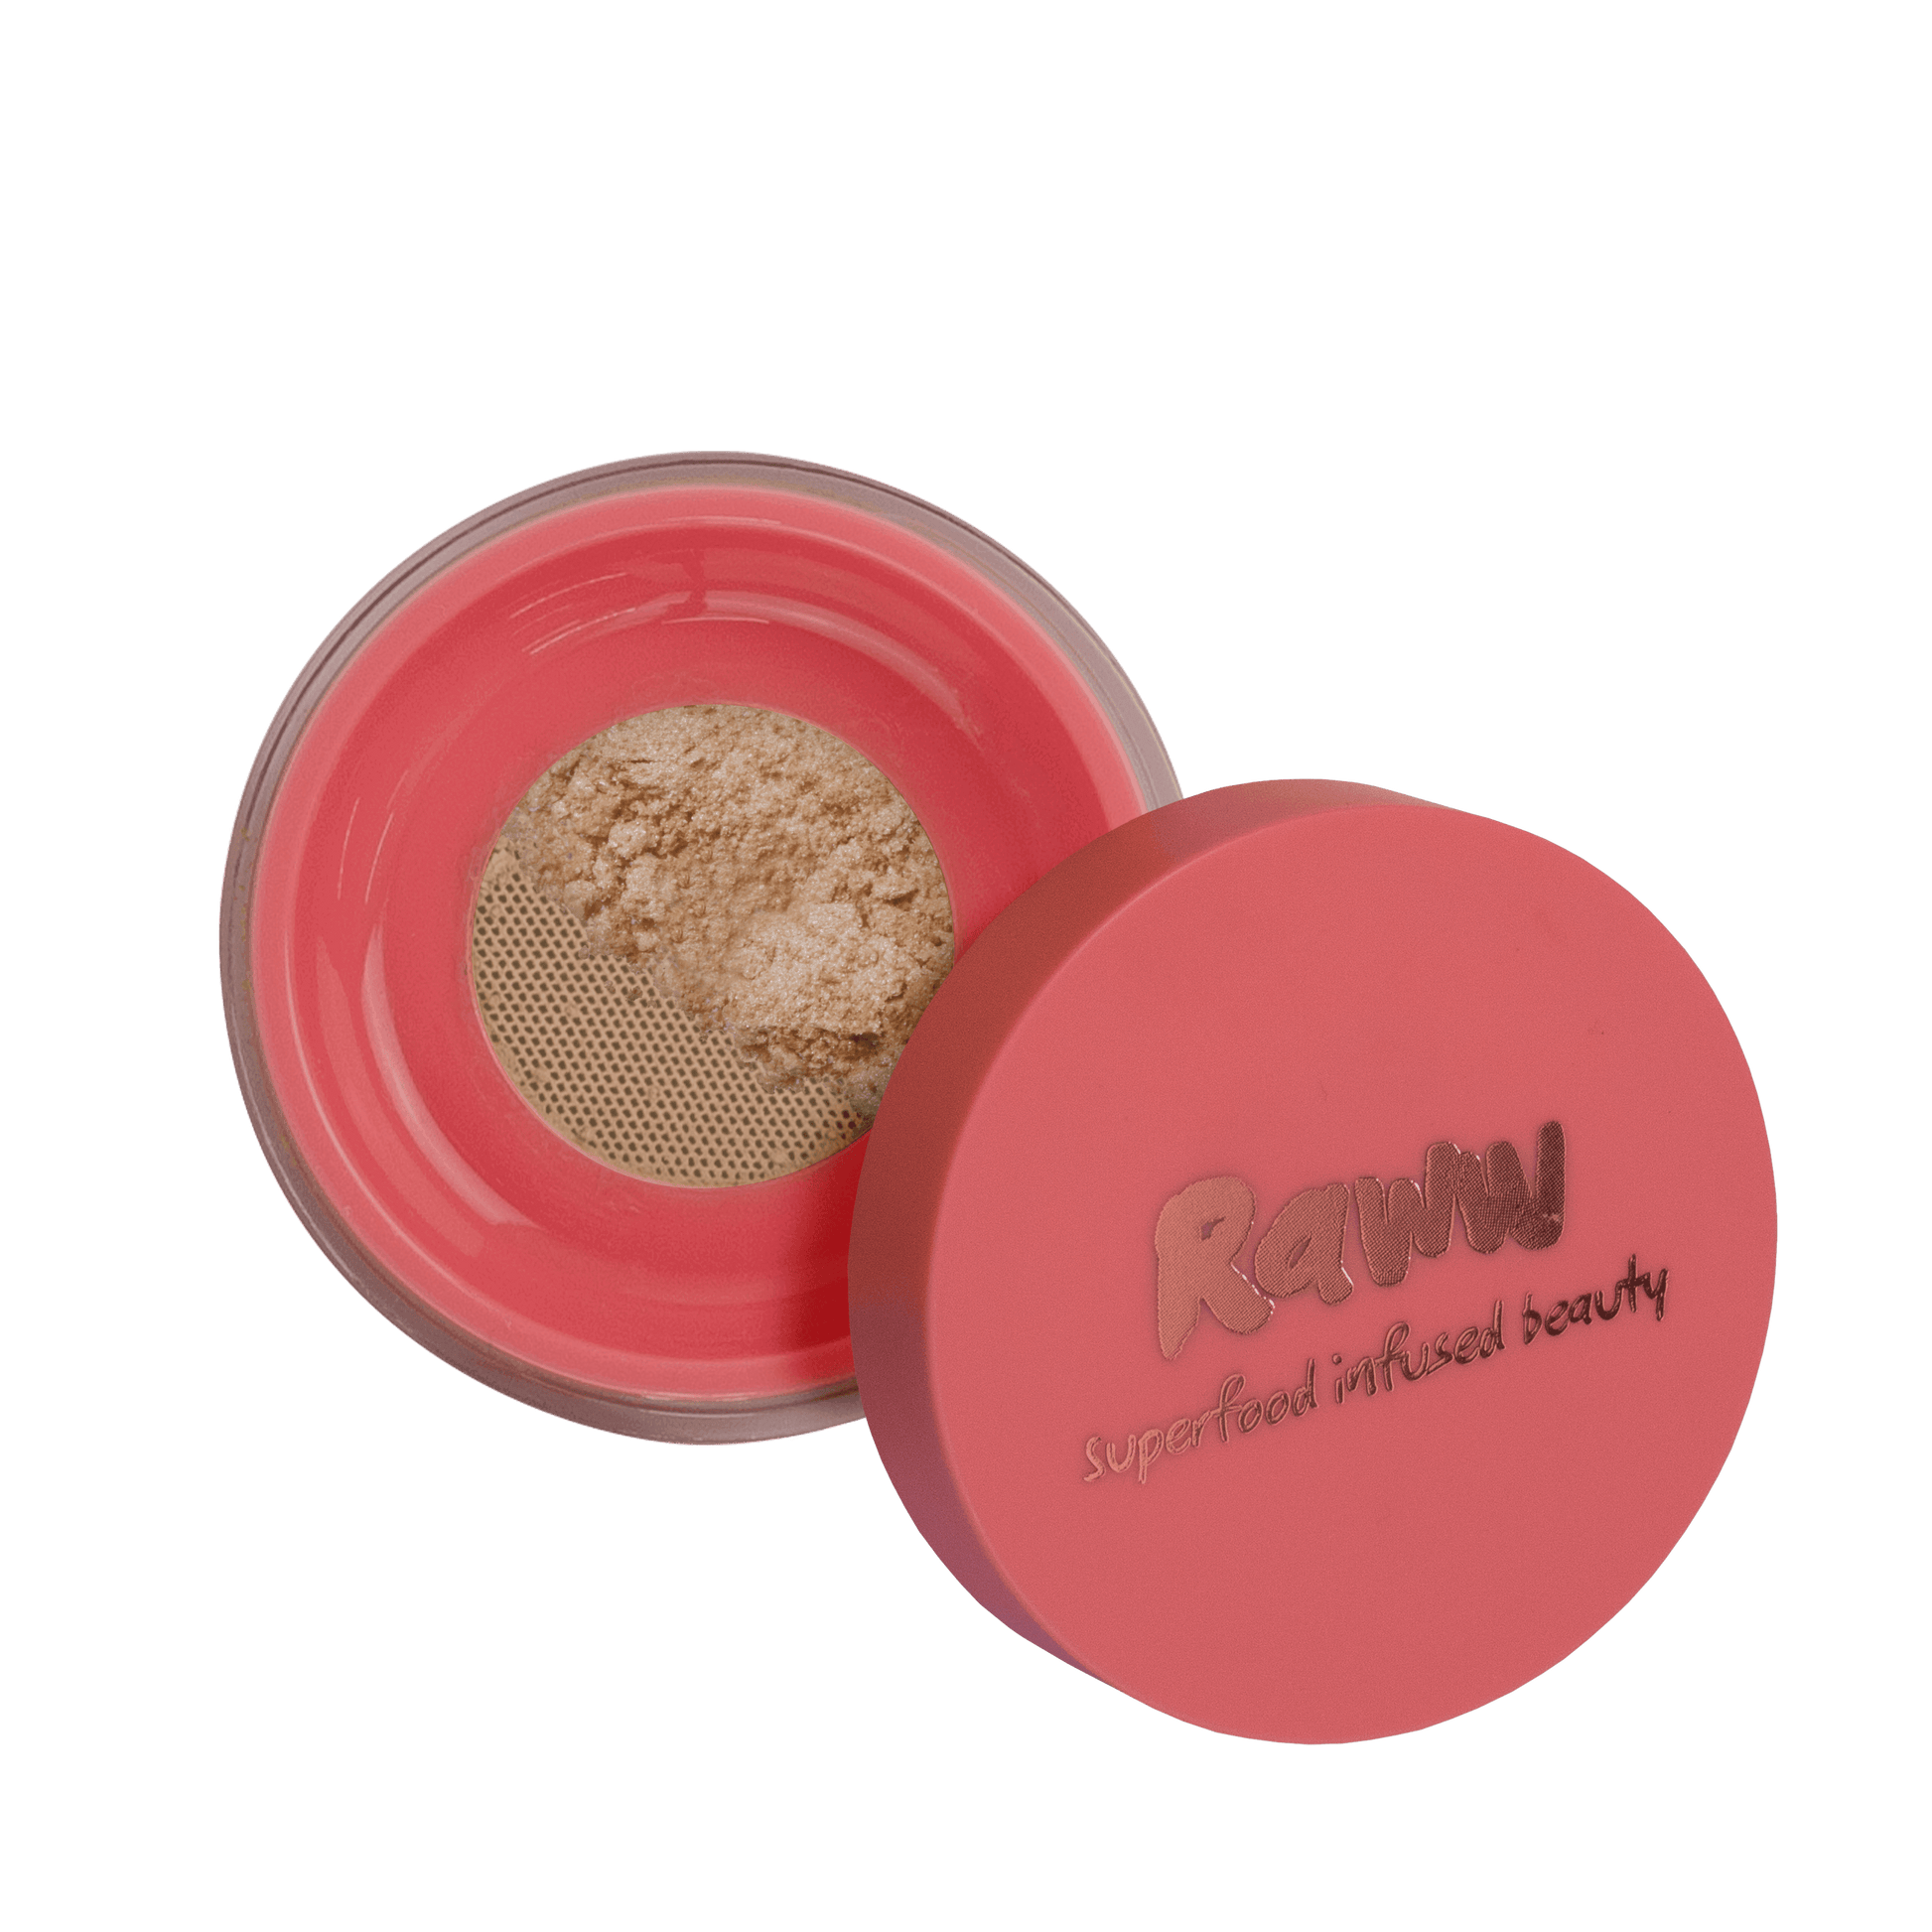 Pomegranate Complexion Powder | RAWW Cosmetics